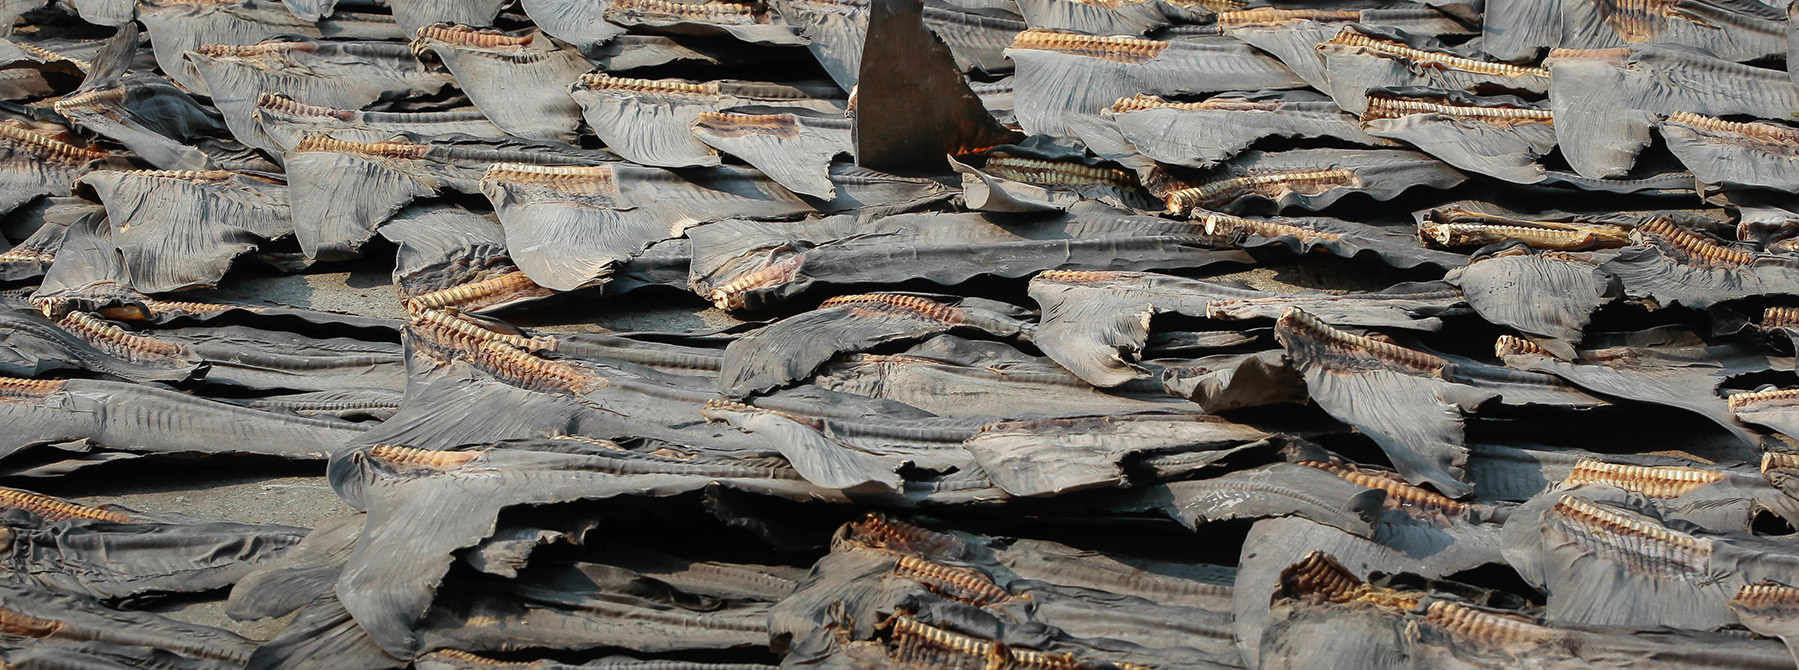 Shark fins with skin during the drying process, taken in Hong Kong © WWF-Hong Kong / Elson Li